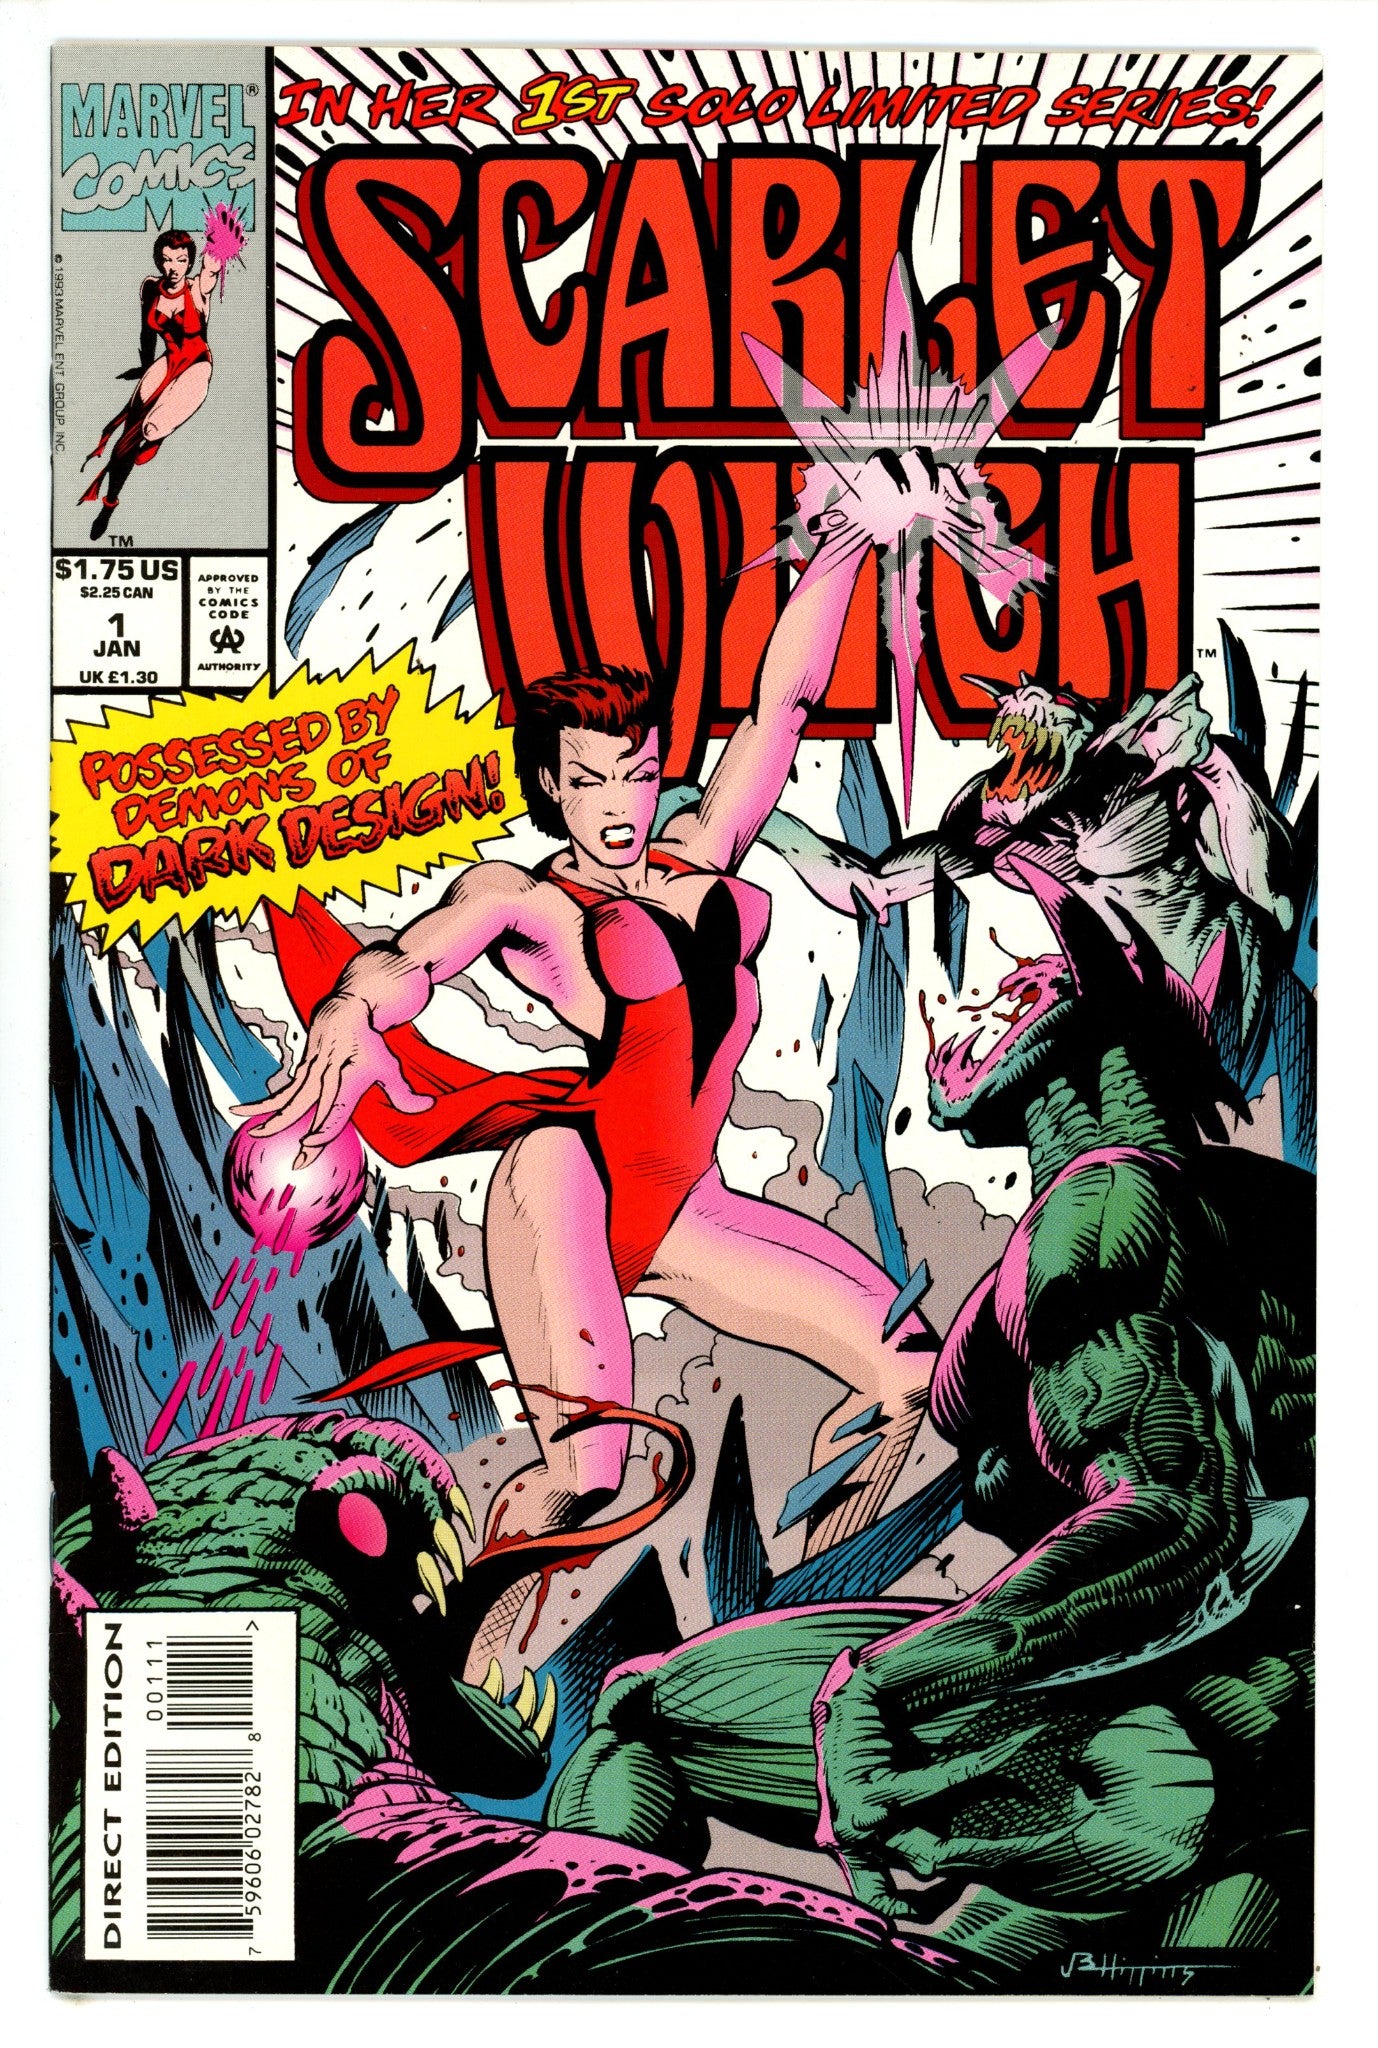 Scarlet Witch Vol 1 1 VF+ (8.5) (1994)